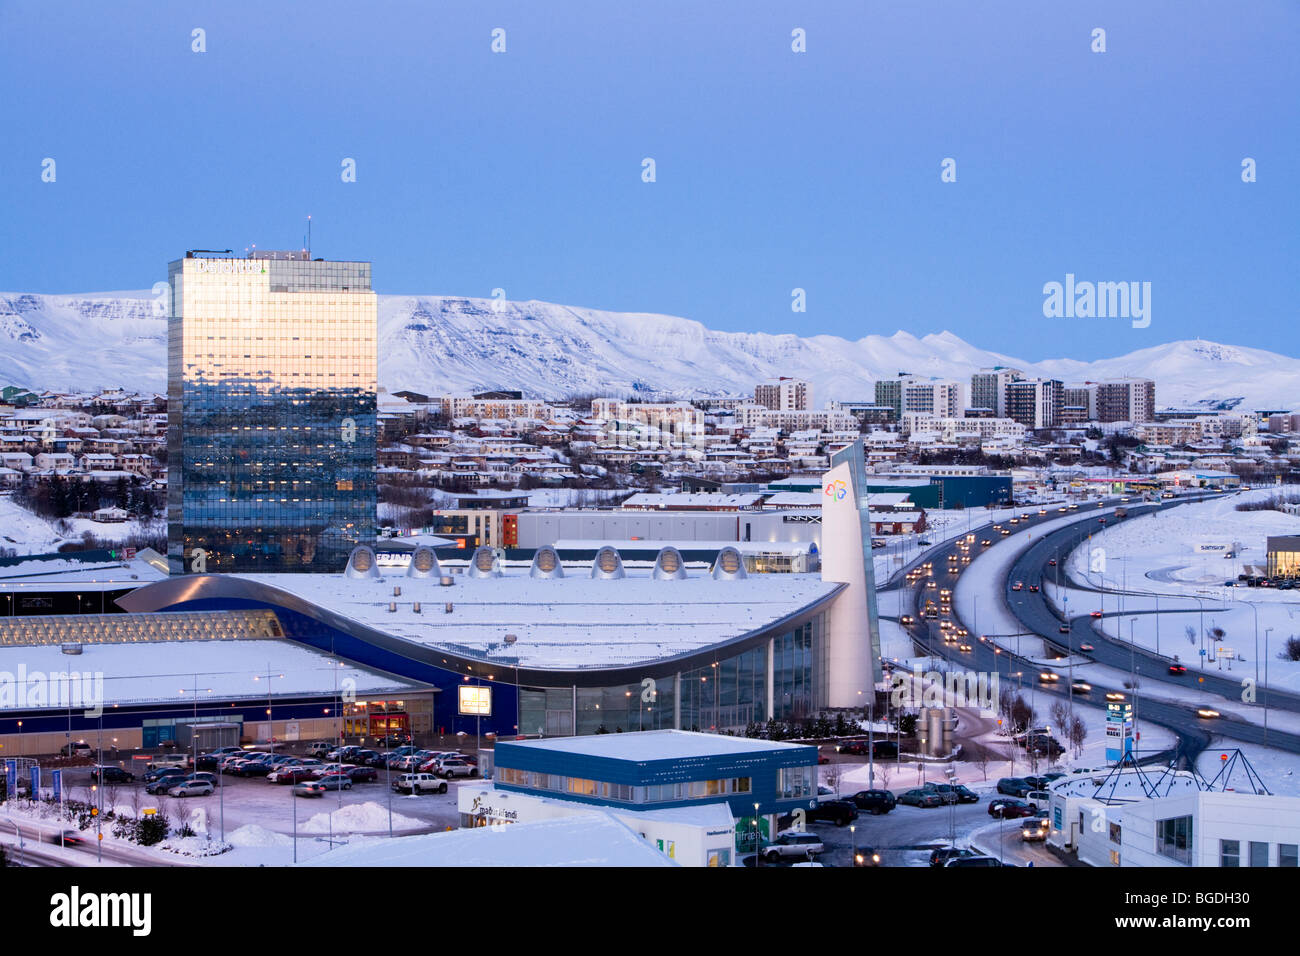 'Smaralind' shopping center and 'Turninn' office building with Deloitte headquarters. Kopavogur, Greater Reykjavik area, Iceland Stock Photo